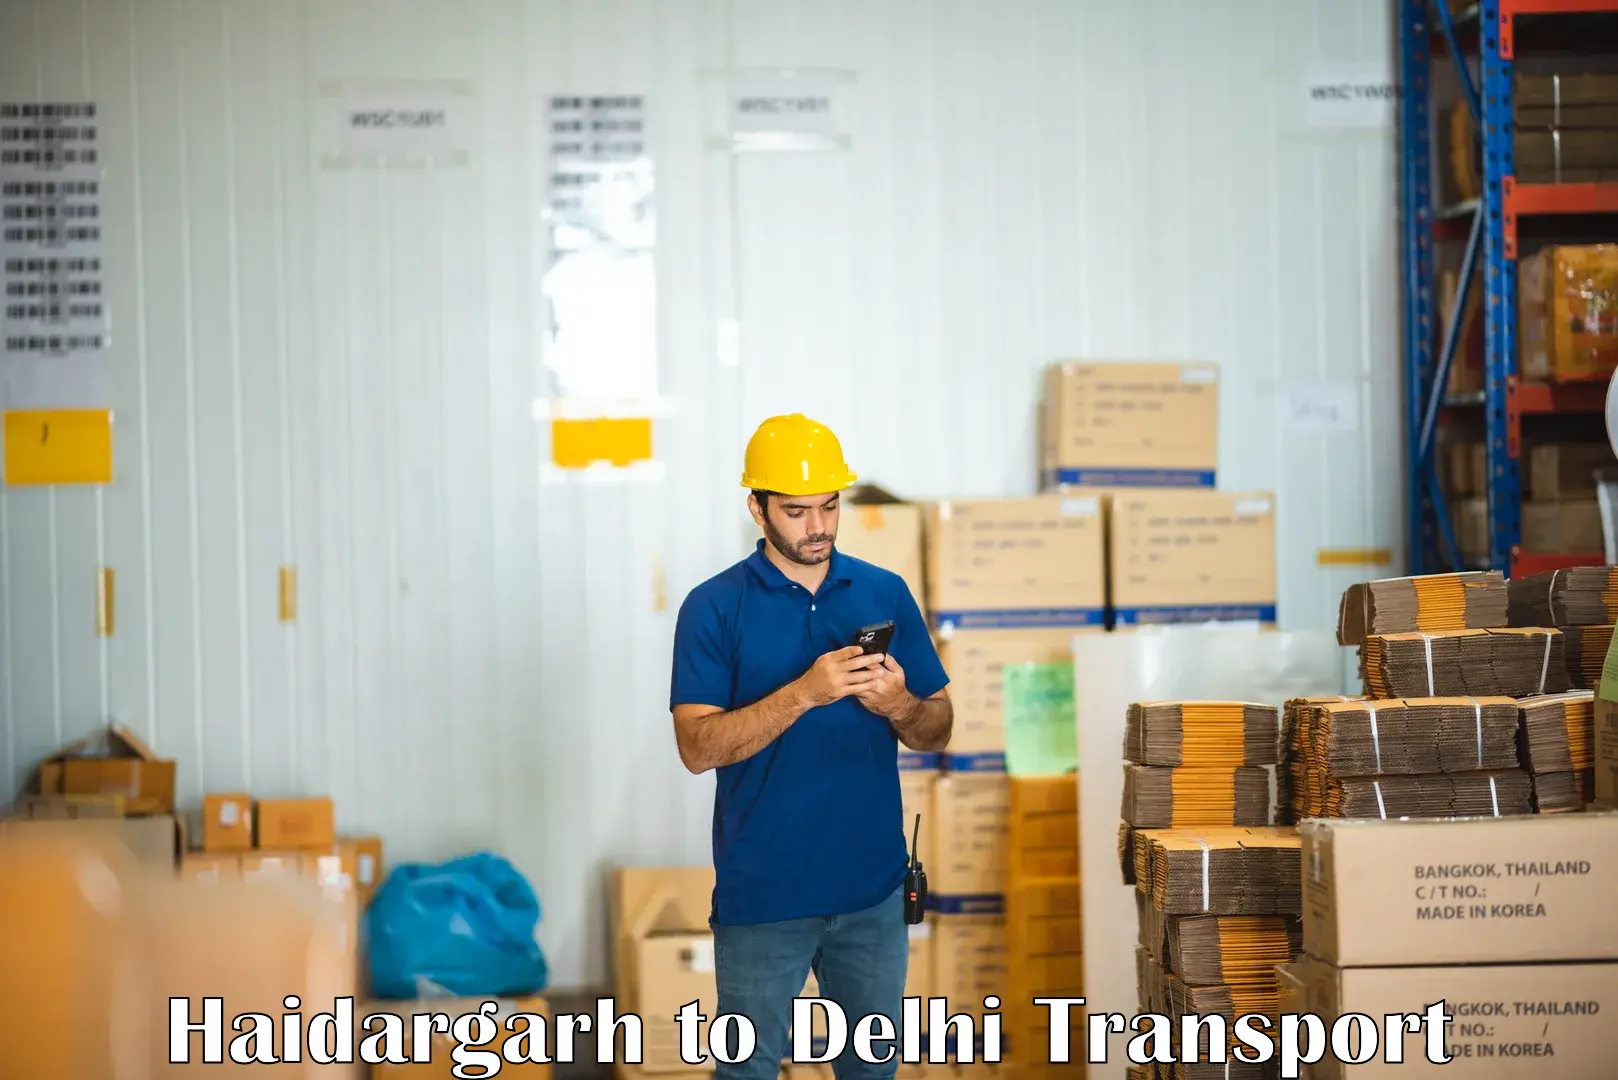 Commercial transport service Haidargarh to East Delhi